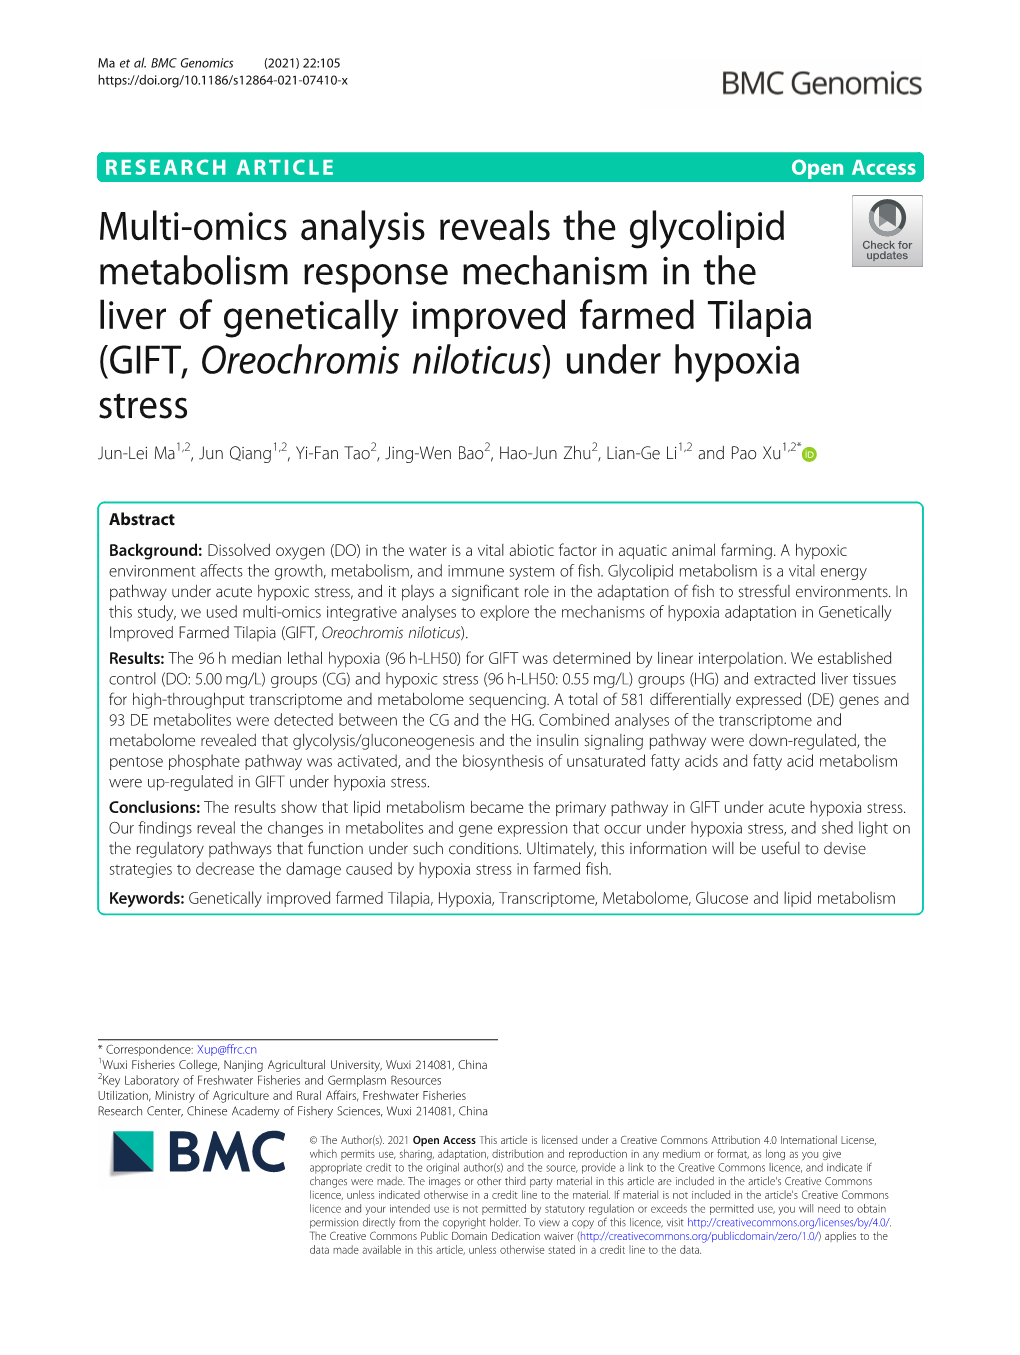 Multi-Omics Analysis Reveals the Glycolipid